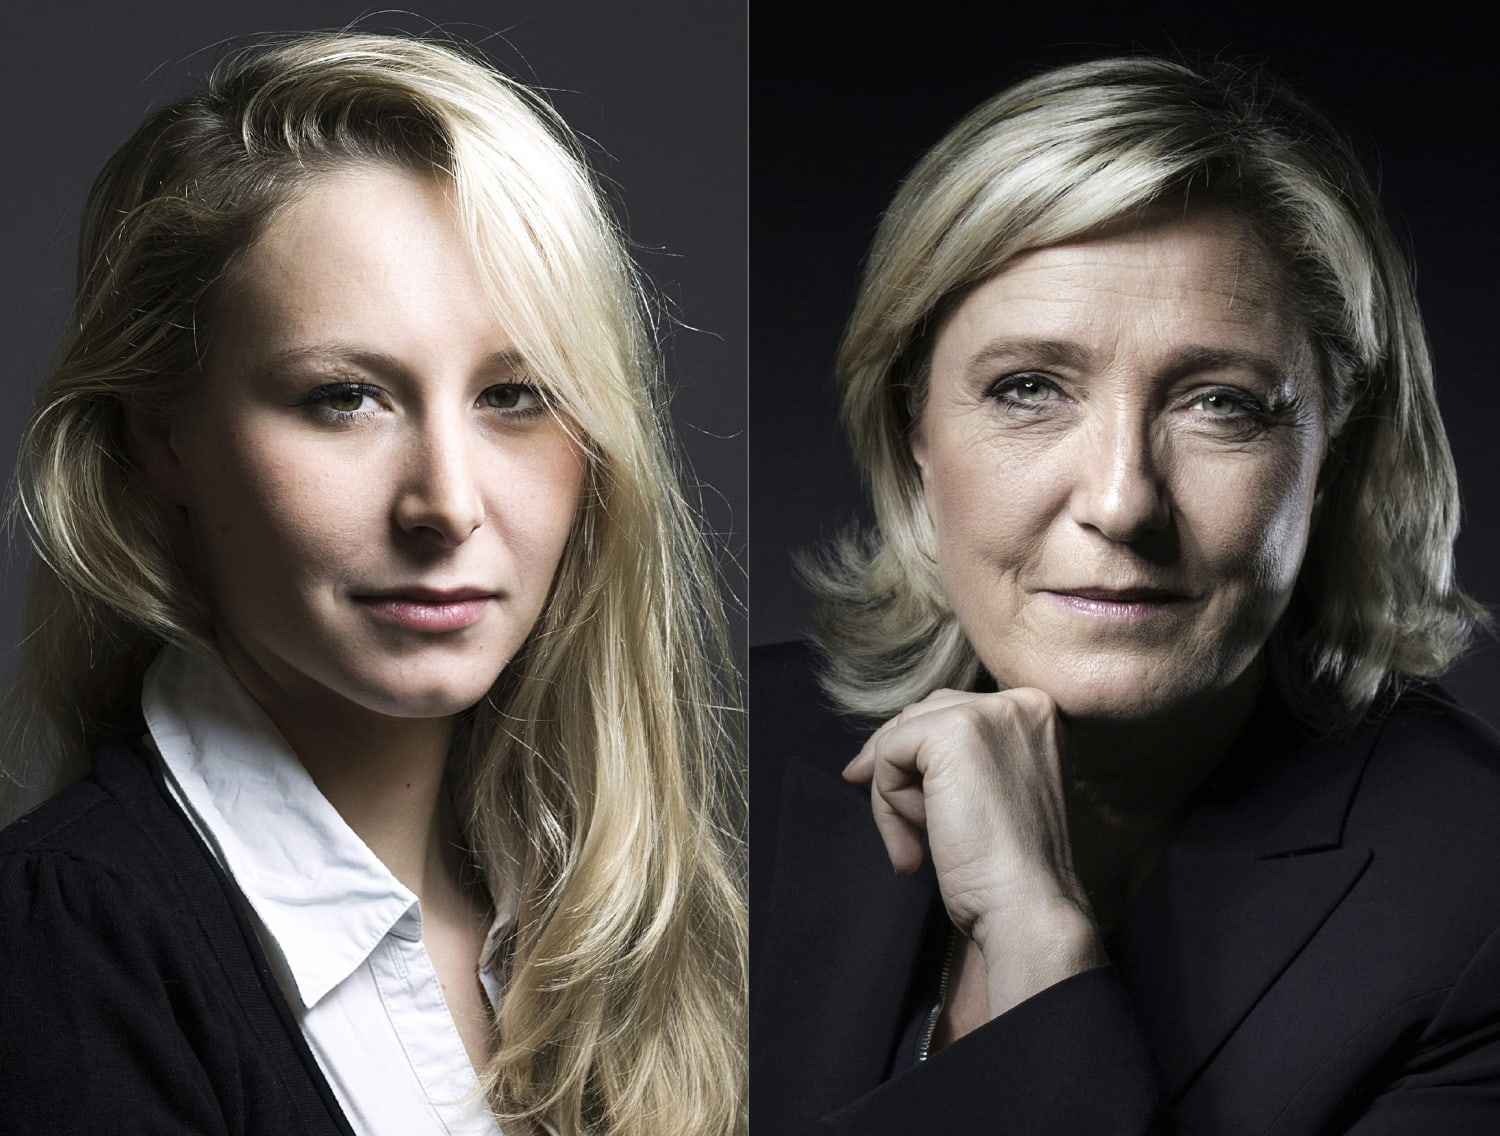 Vervallen Mammoet van nu af aan Marion Marechal-Le Pen Quits Politics After Aunt's Election Loss